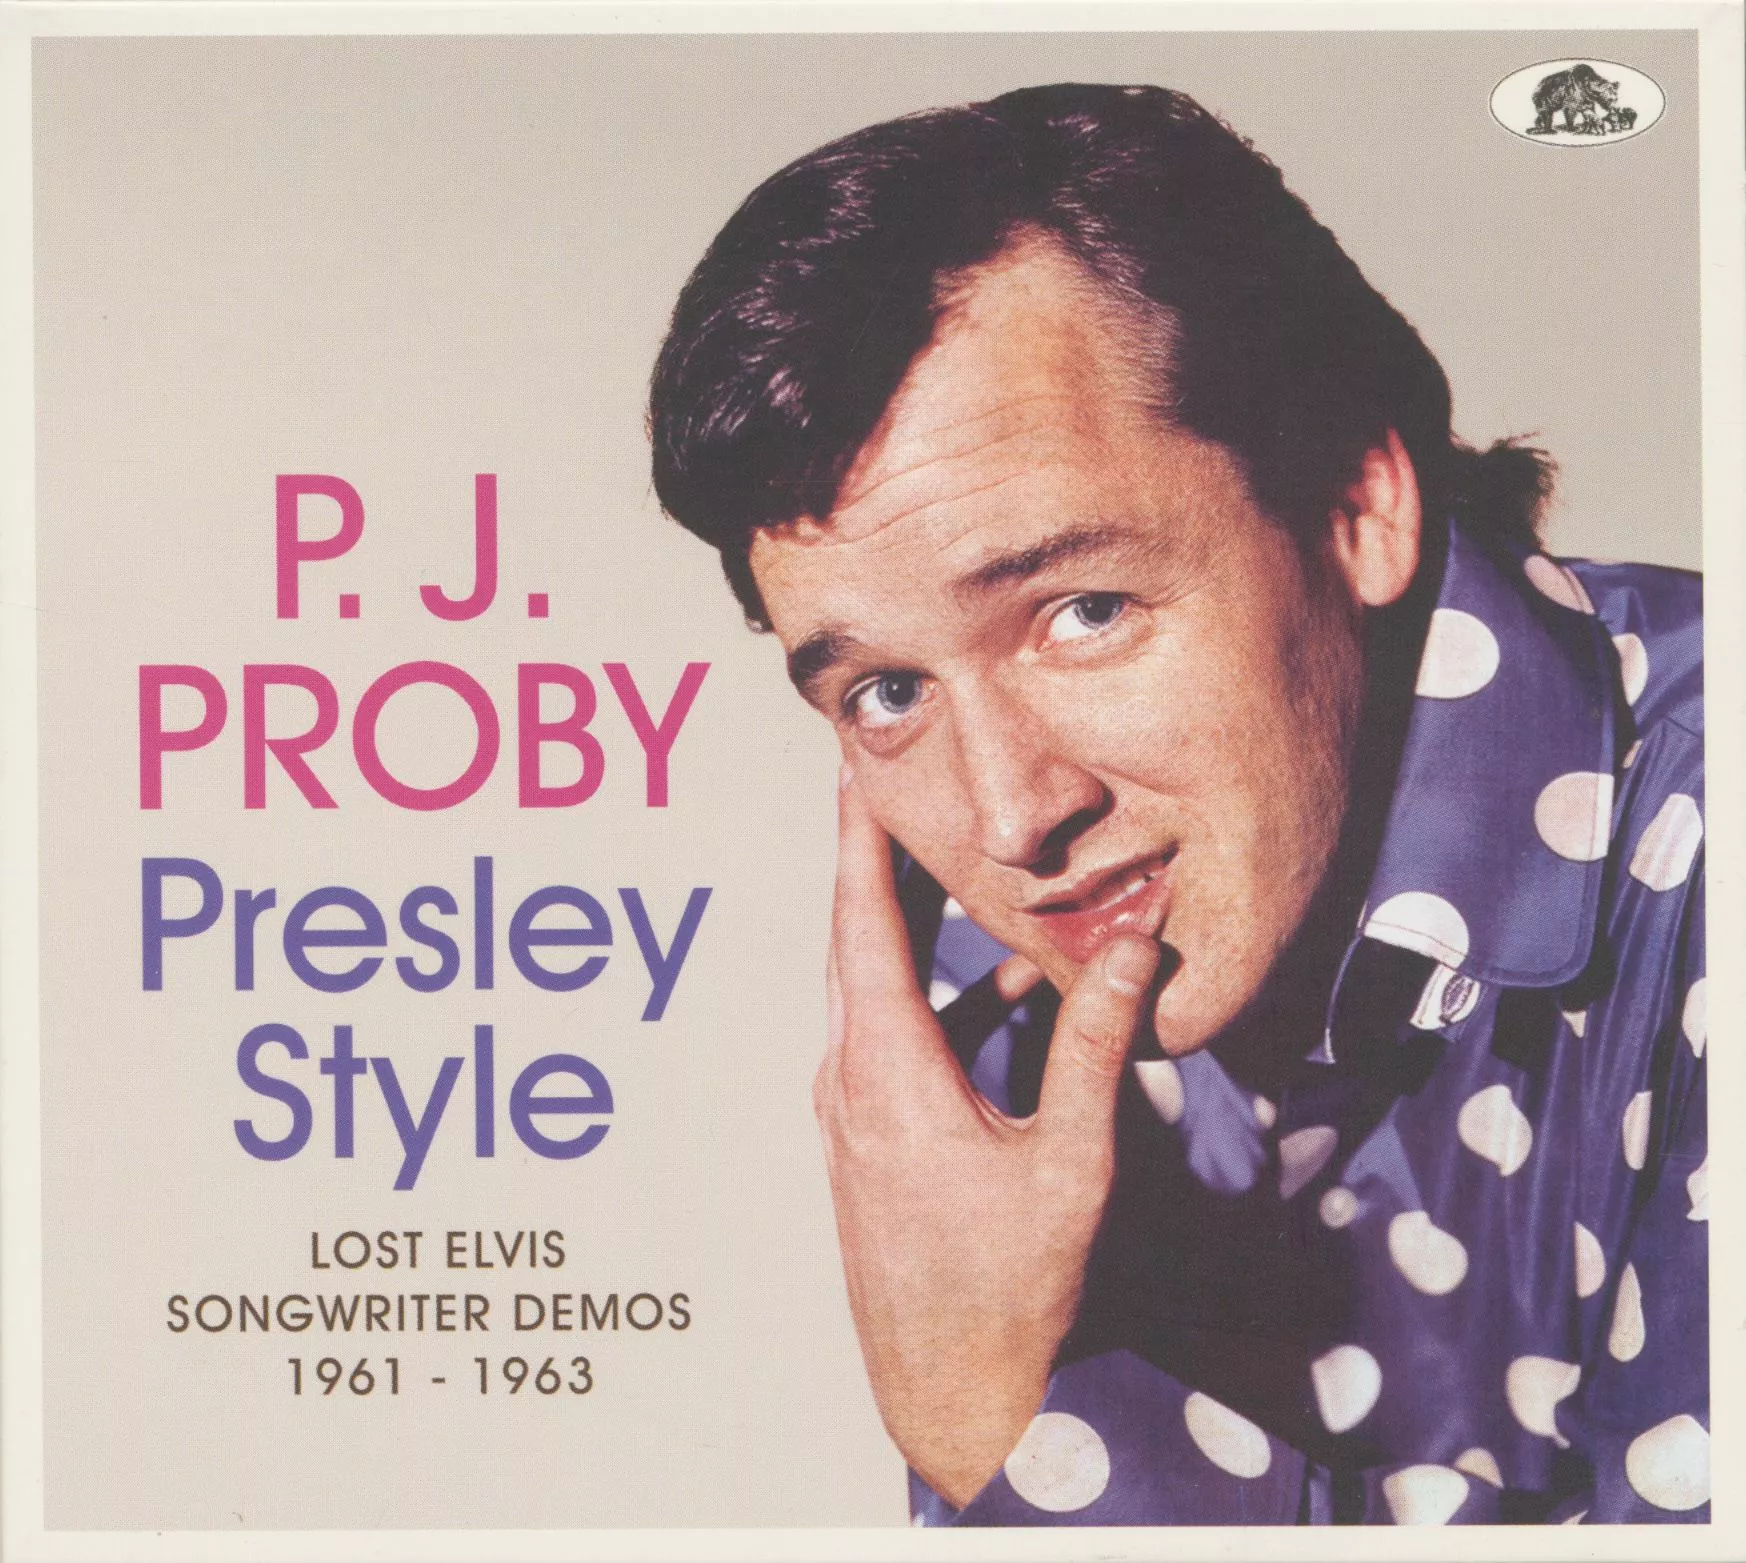 Presley Style - Lost Elvis Songwriter Demos - P. J. Proby